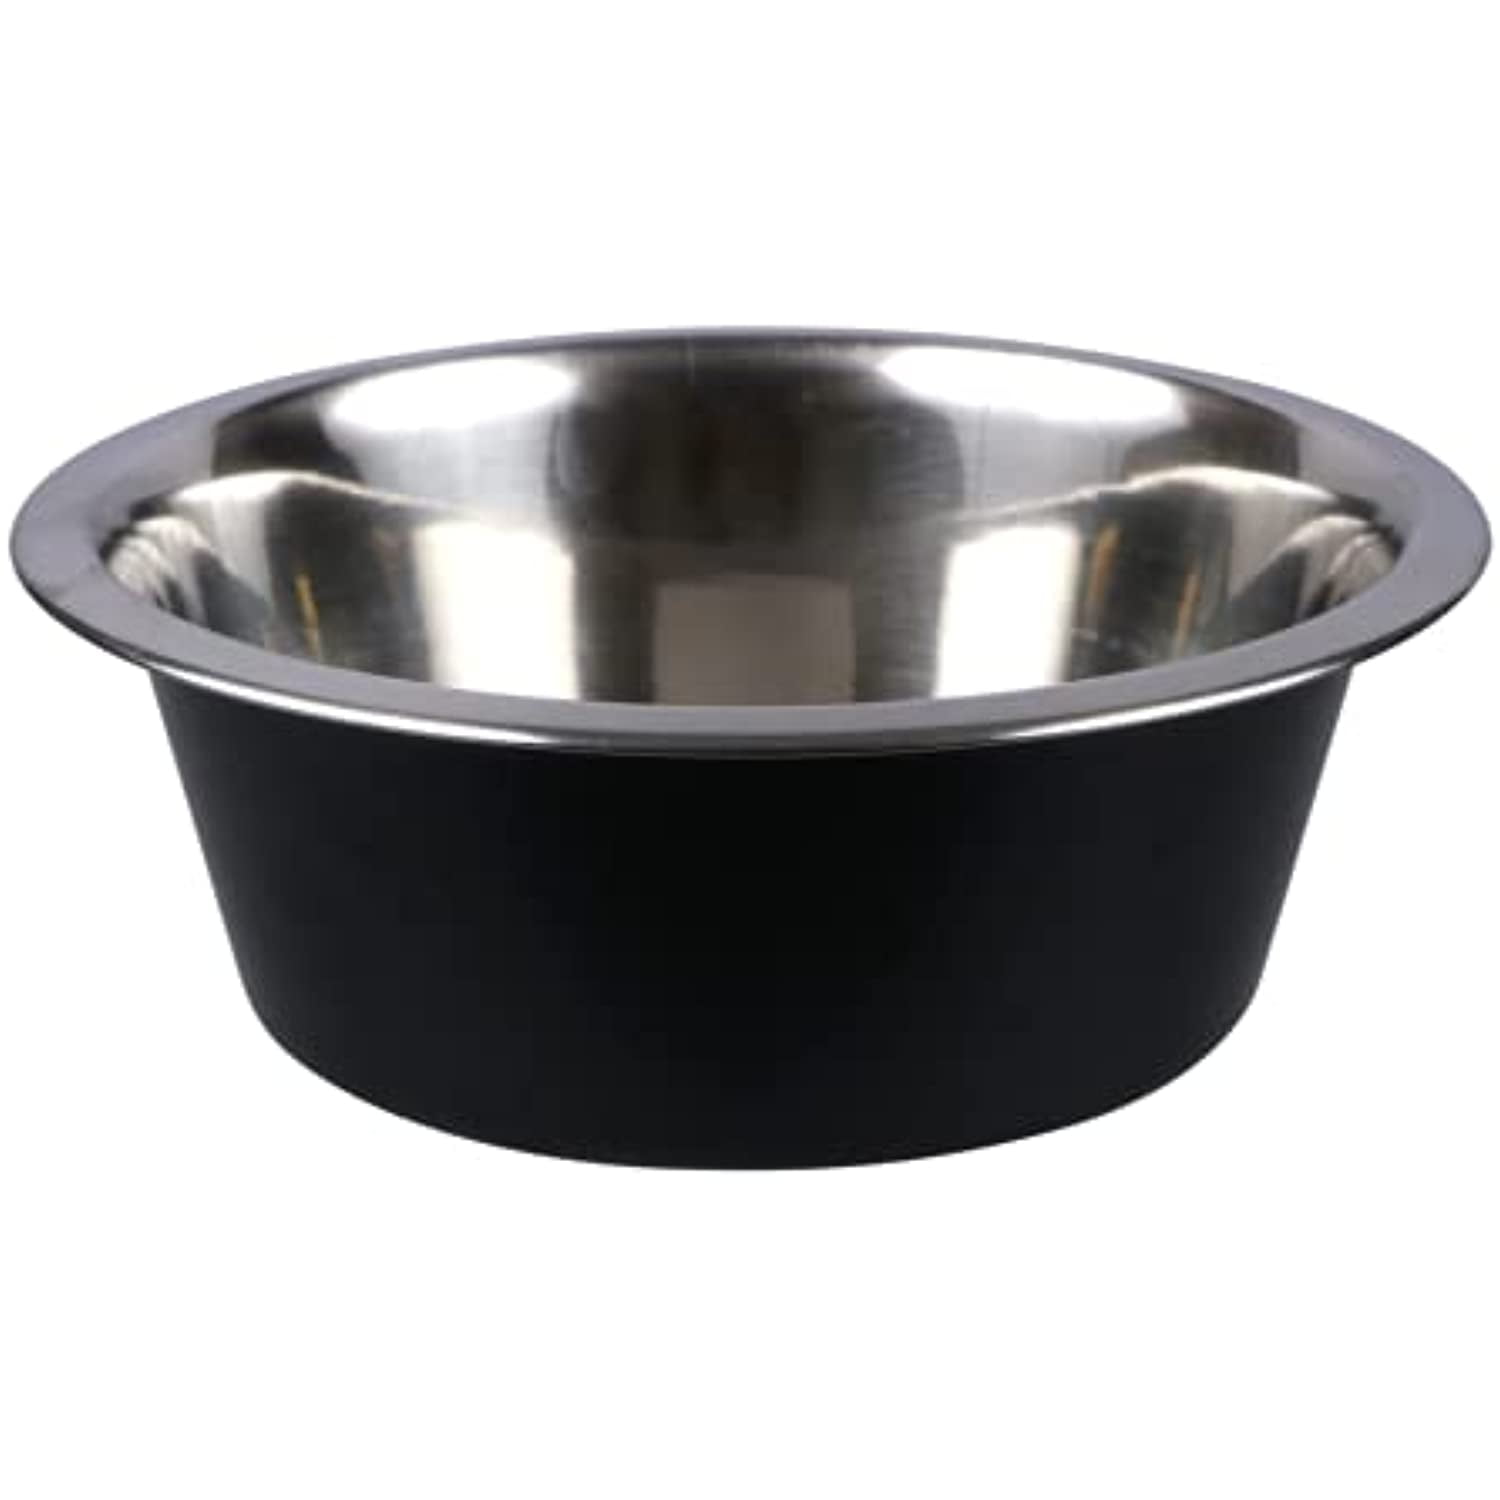 Linden Sweden 5.5 Qt. Heavy-Duty Stainless Steel Dog Bowl